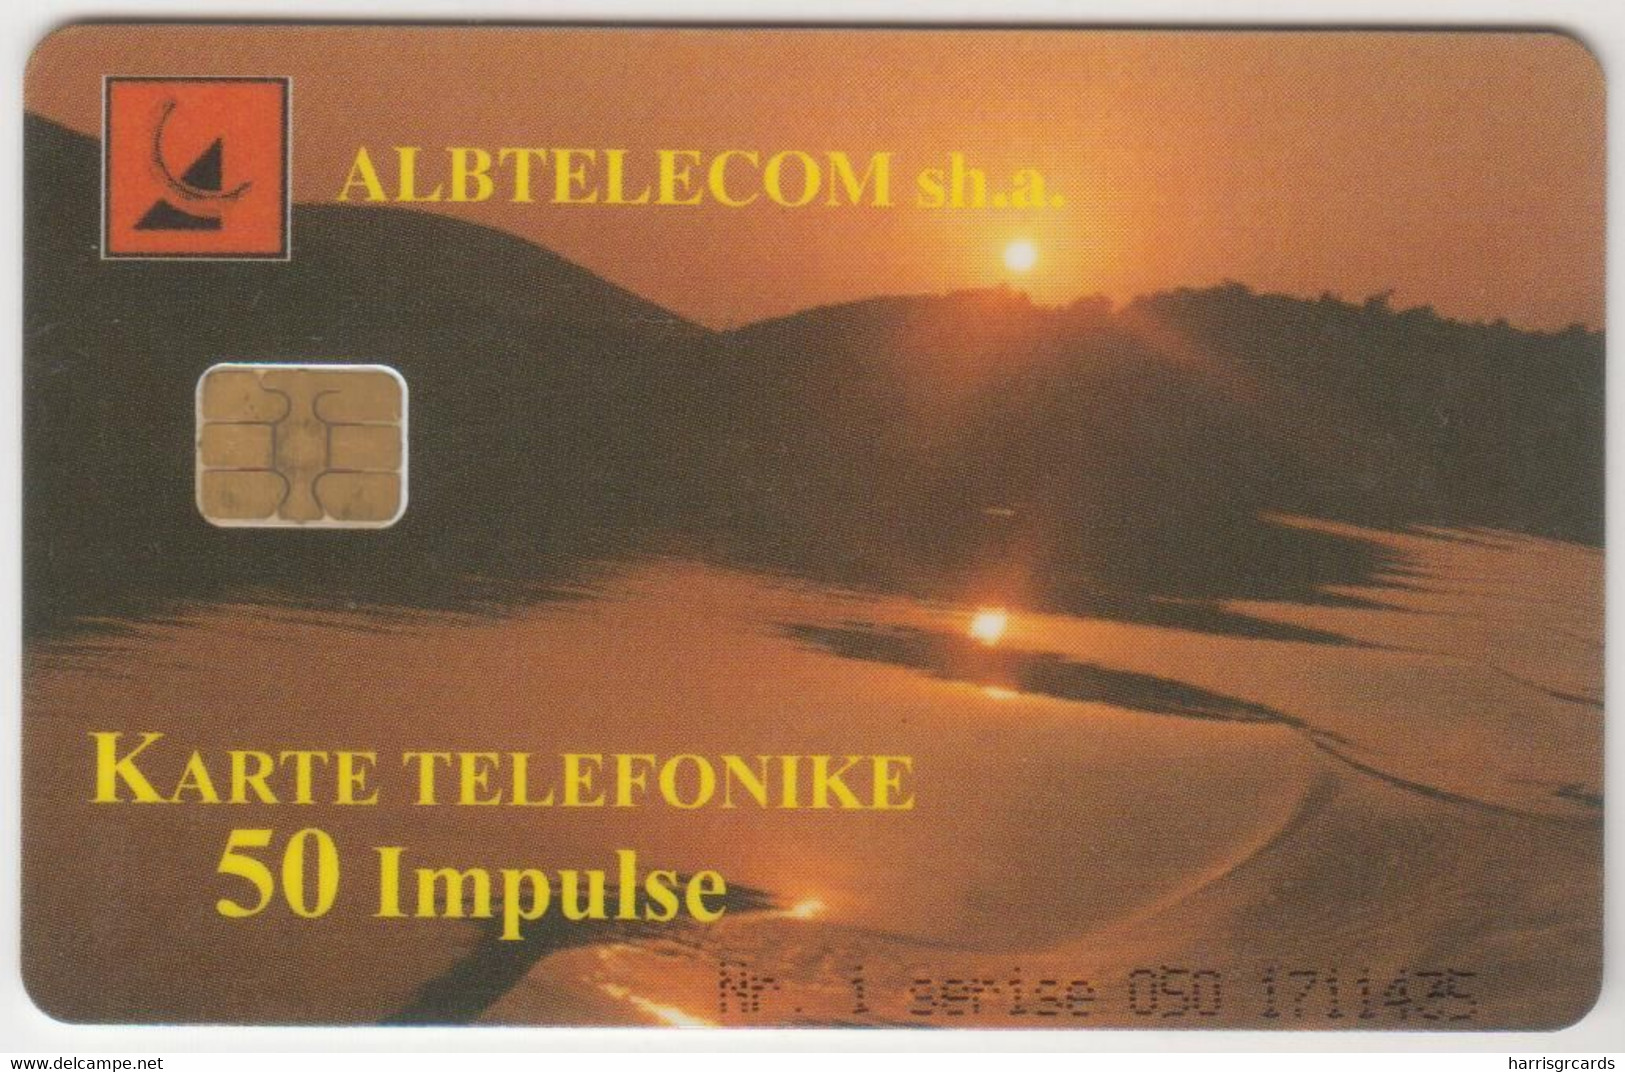 ALBANIA - Sunset ,05/99, 50 U, Tirage 180,000, Used - Albania